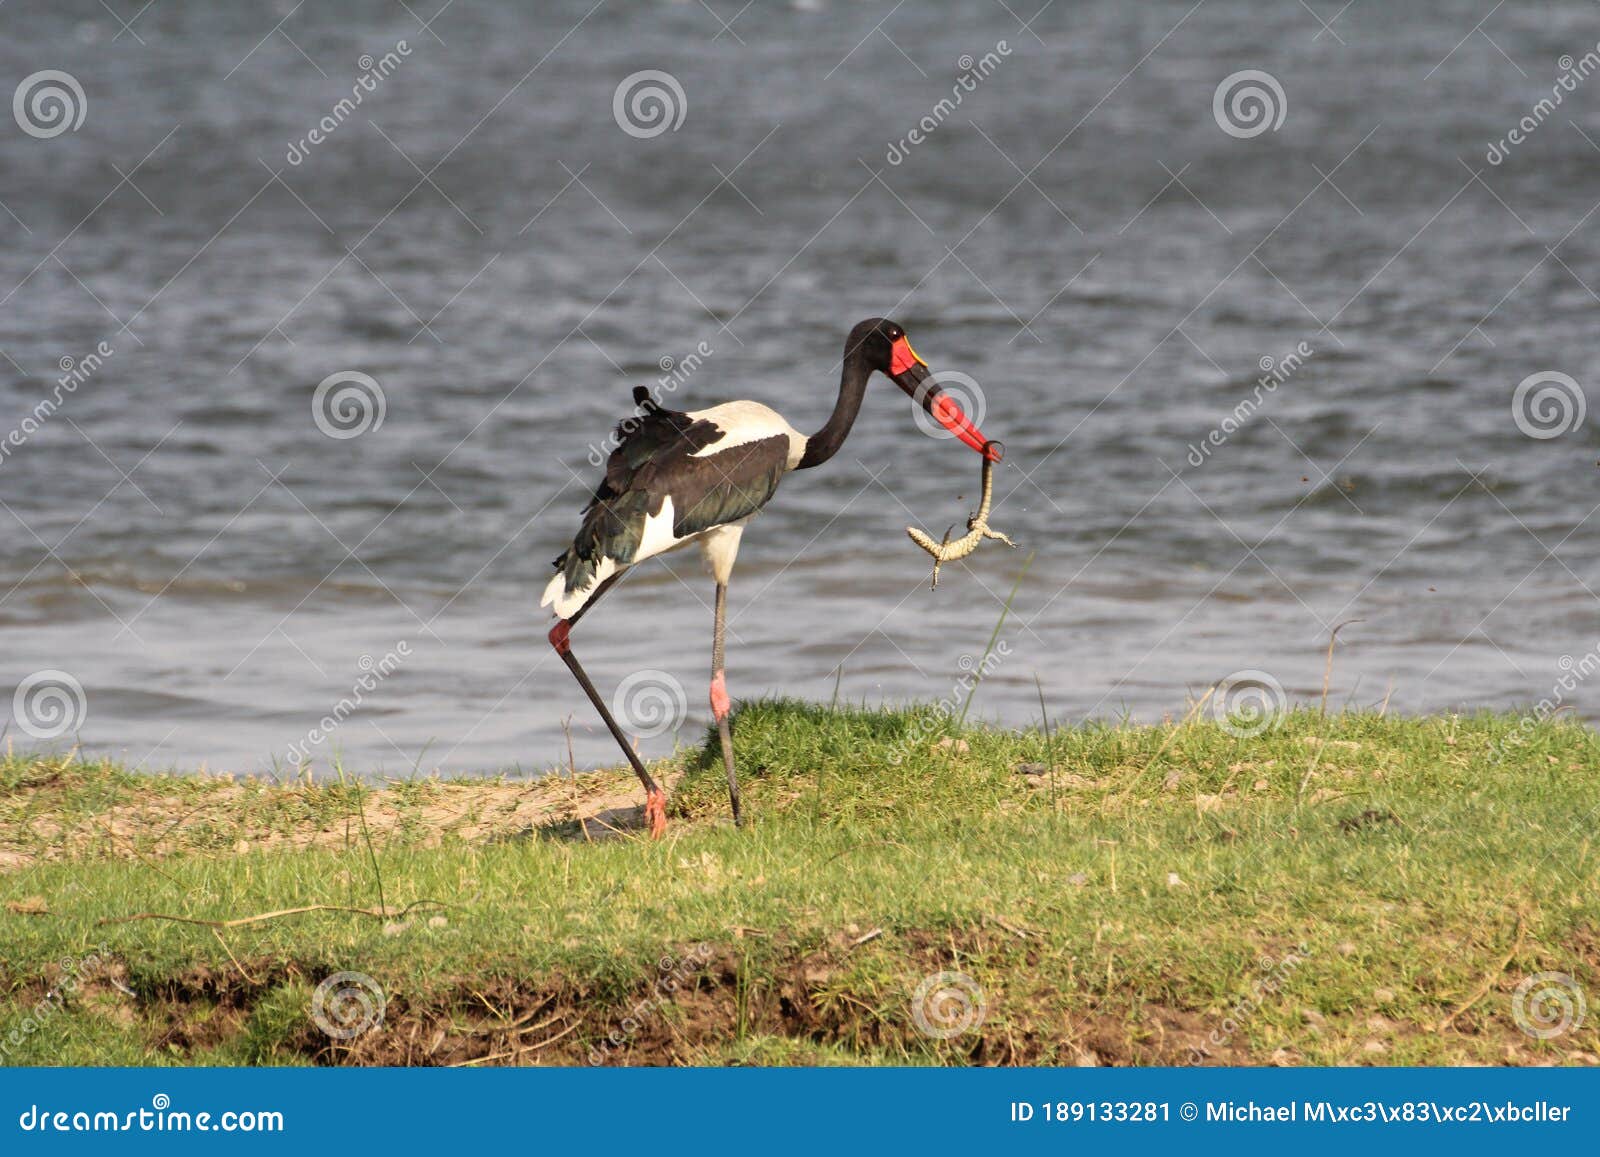 saddle-billed stork with reptil in his bill. ephippiorhynchus senegalensis